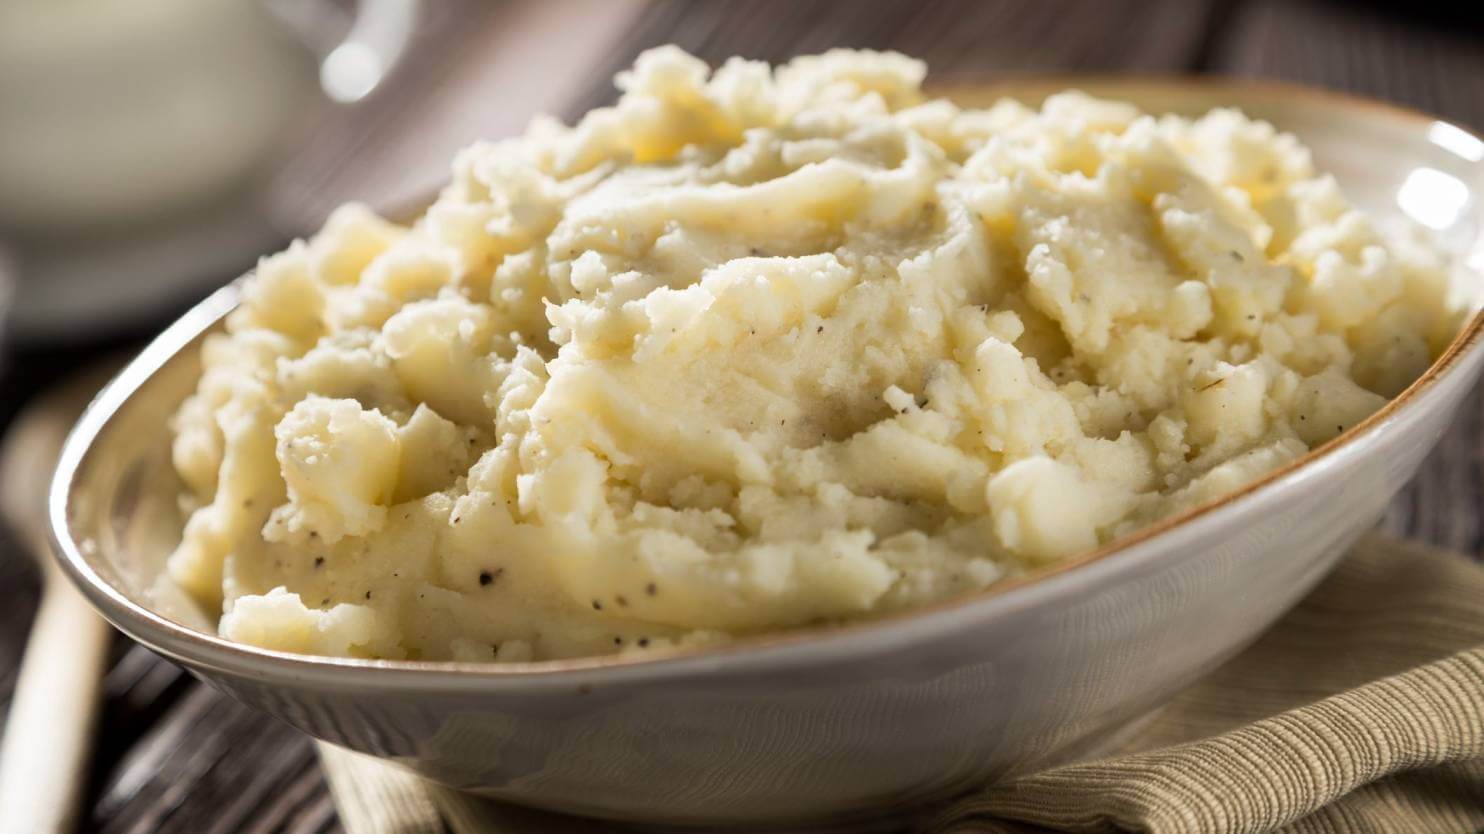 Popeye’s Mashed Potatoes Recipe